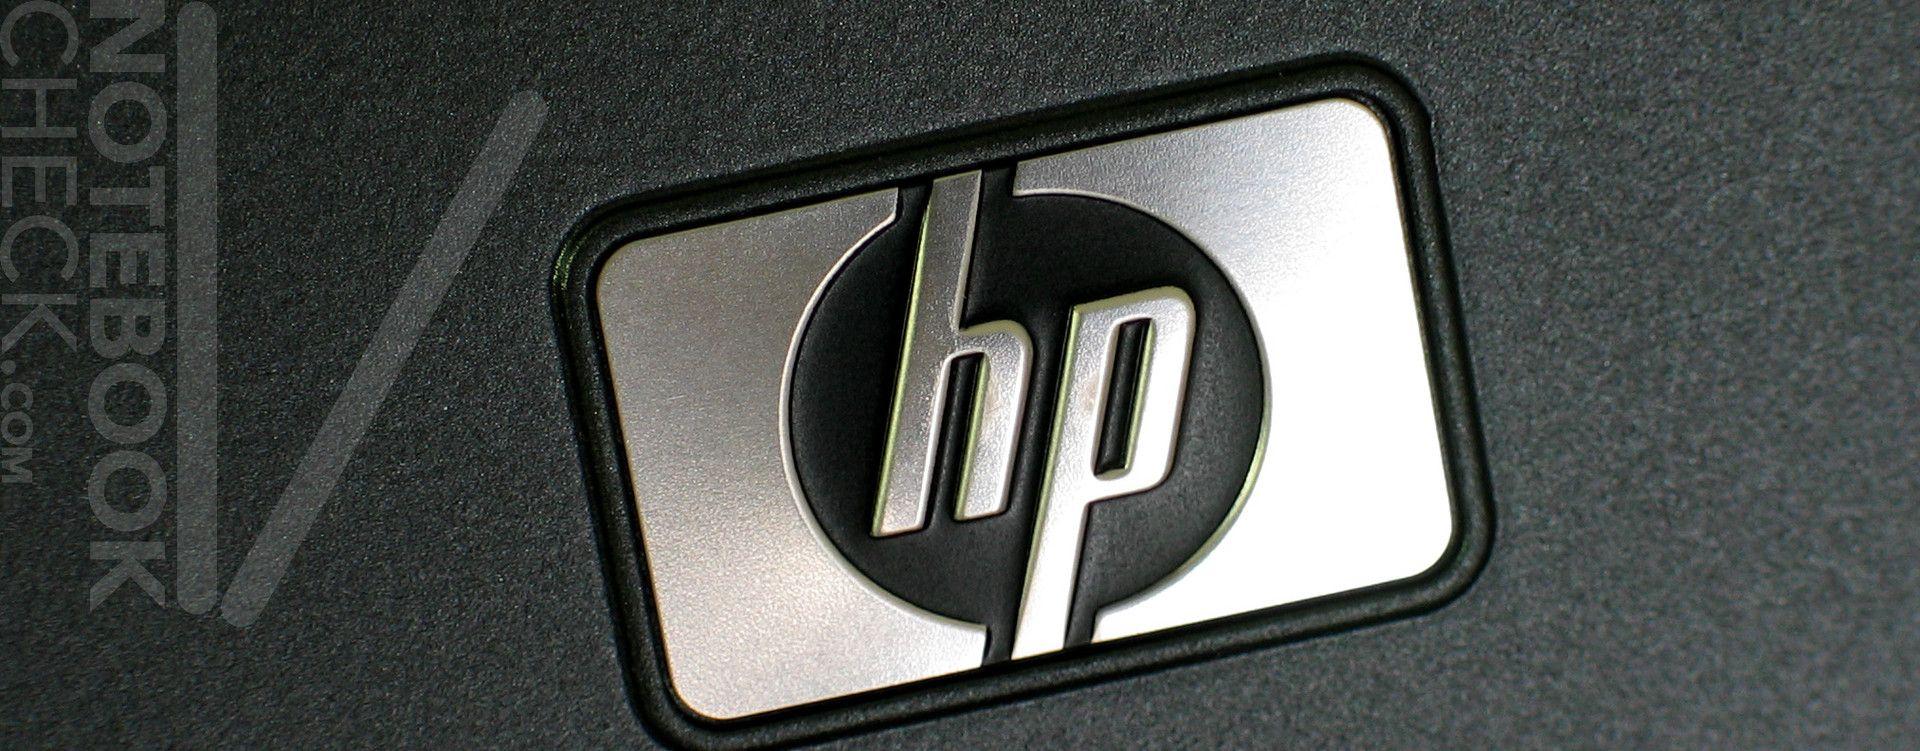 HP Compaq Logo - Review HP Compaq nc8430 Notebook.net Reviews